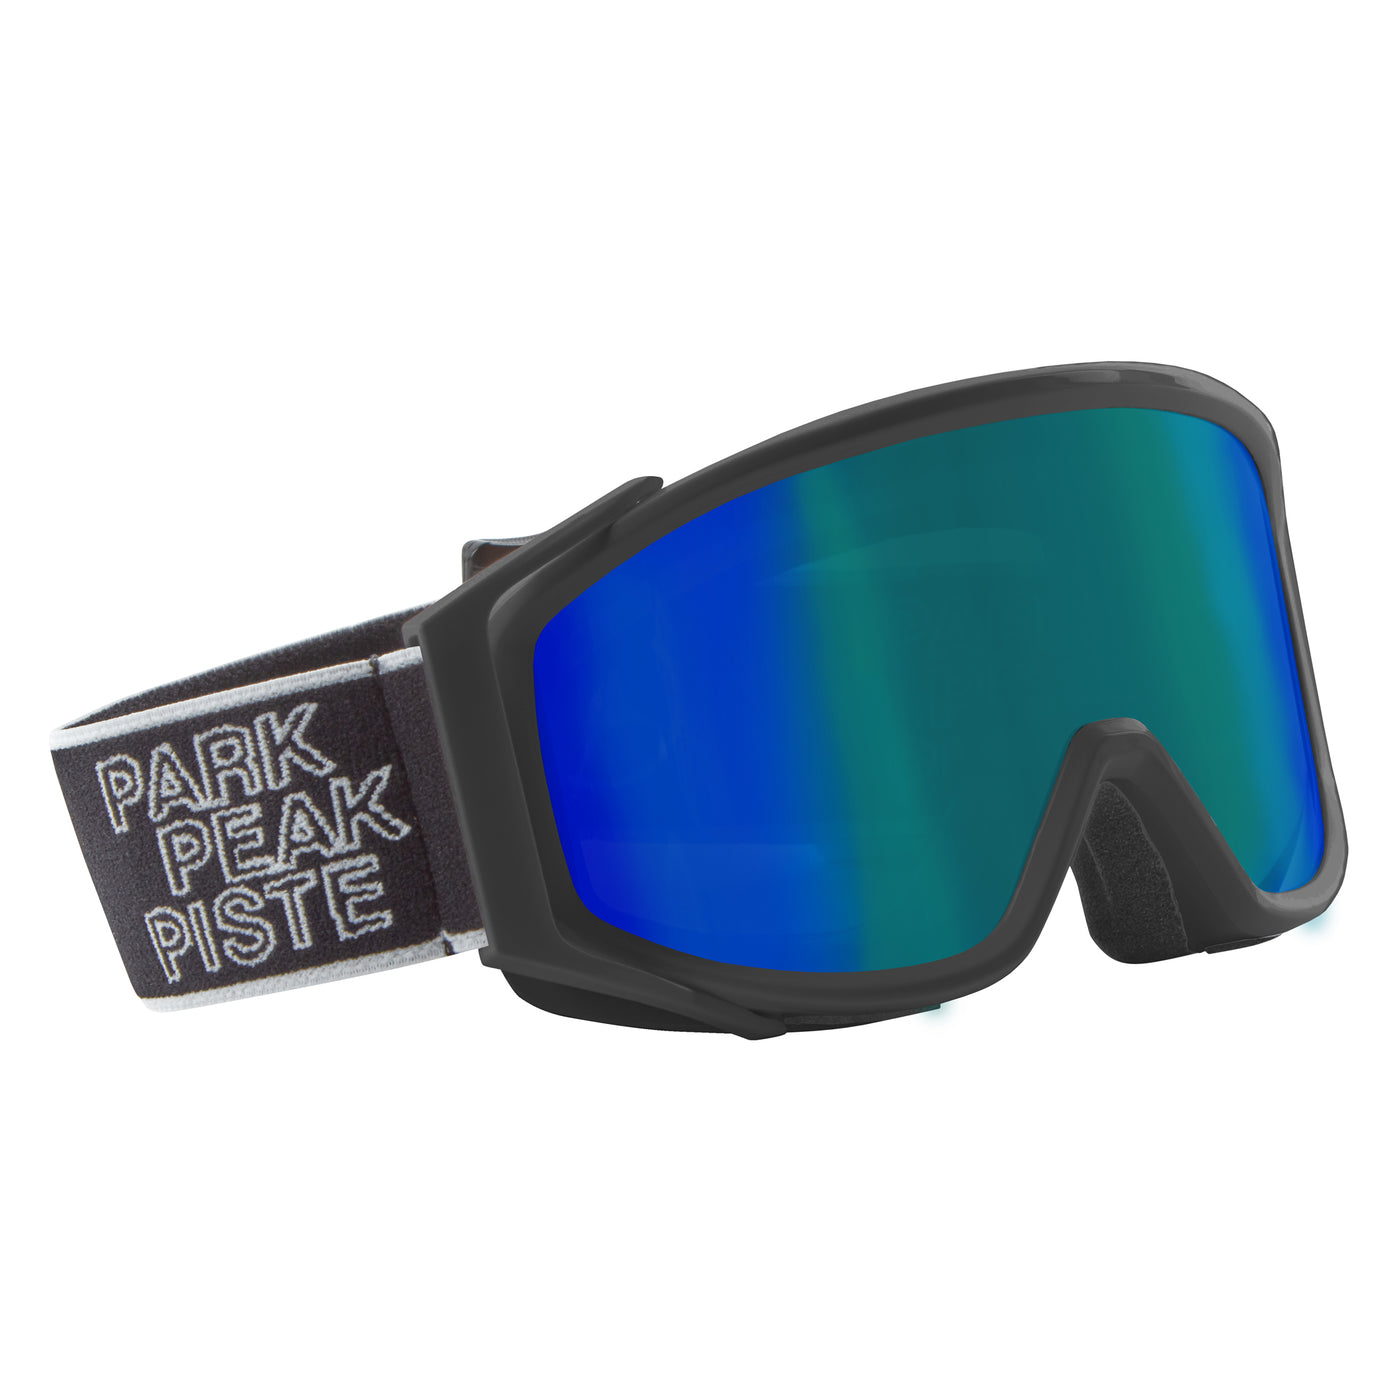 Manbi-PPP Kids Spirit Goggle Black Matt/Blue-Green Mirror